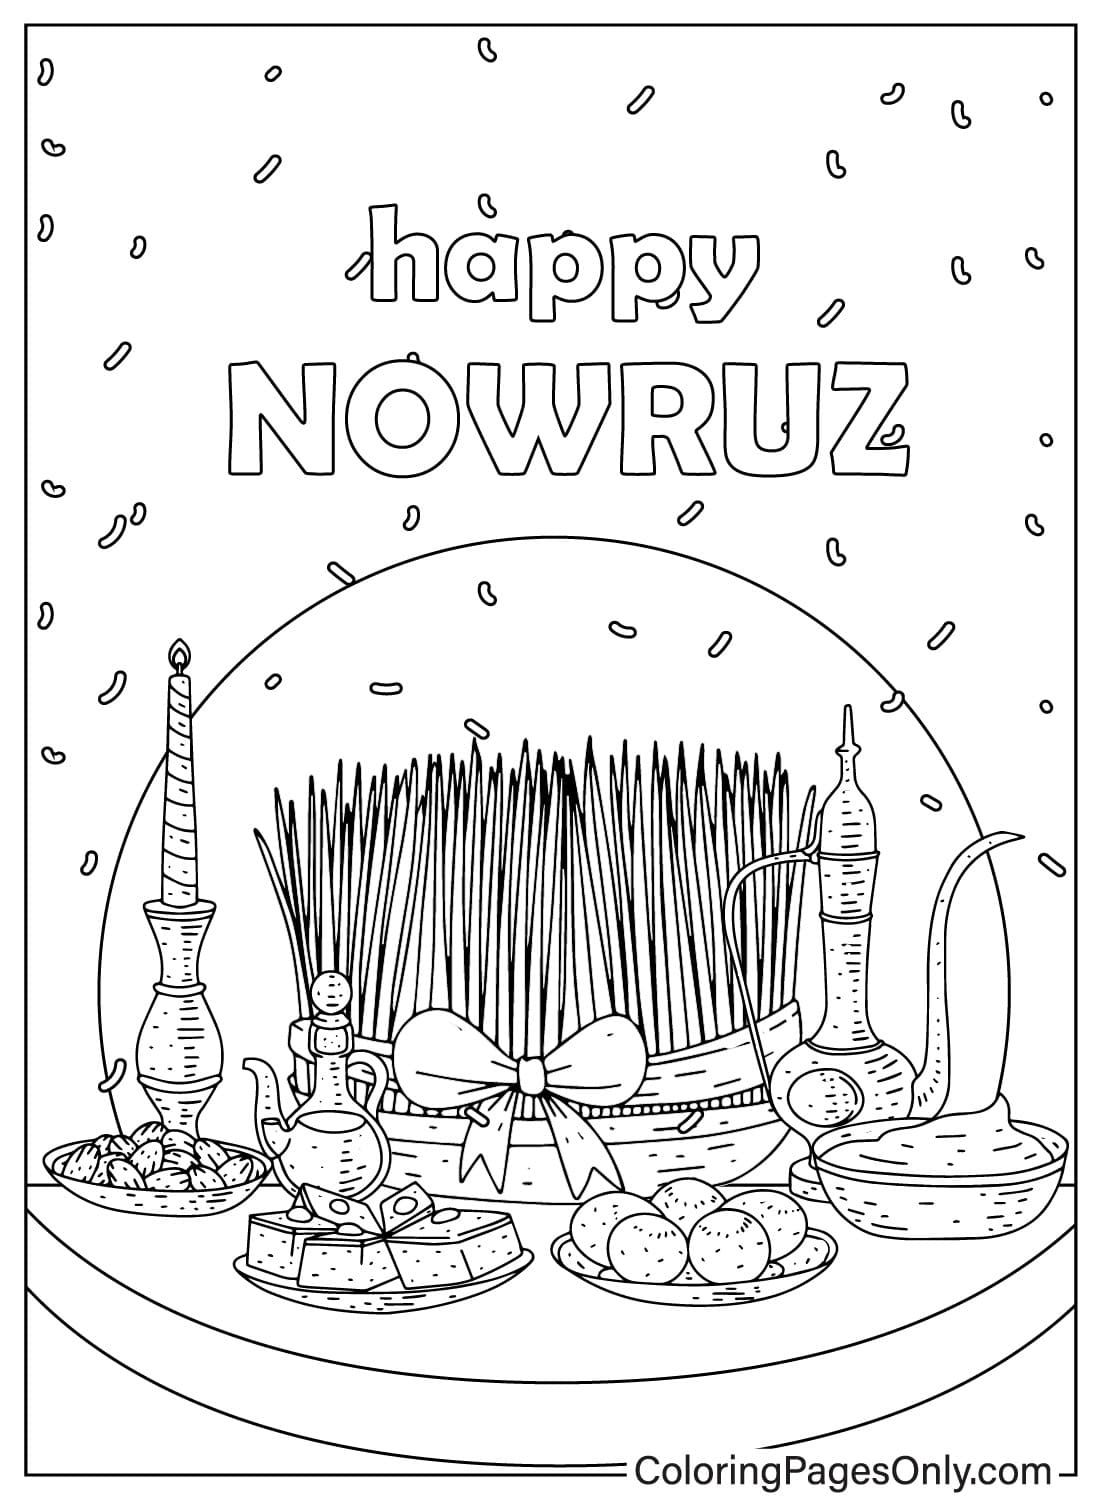 Happy Nowruz Coloring Sheet from International Nowruz Day